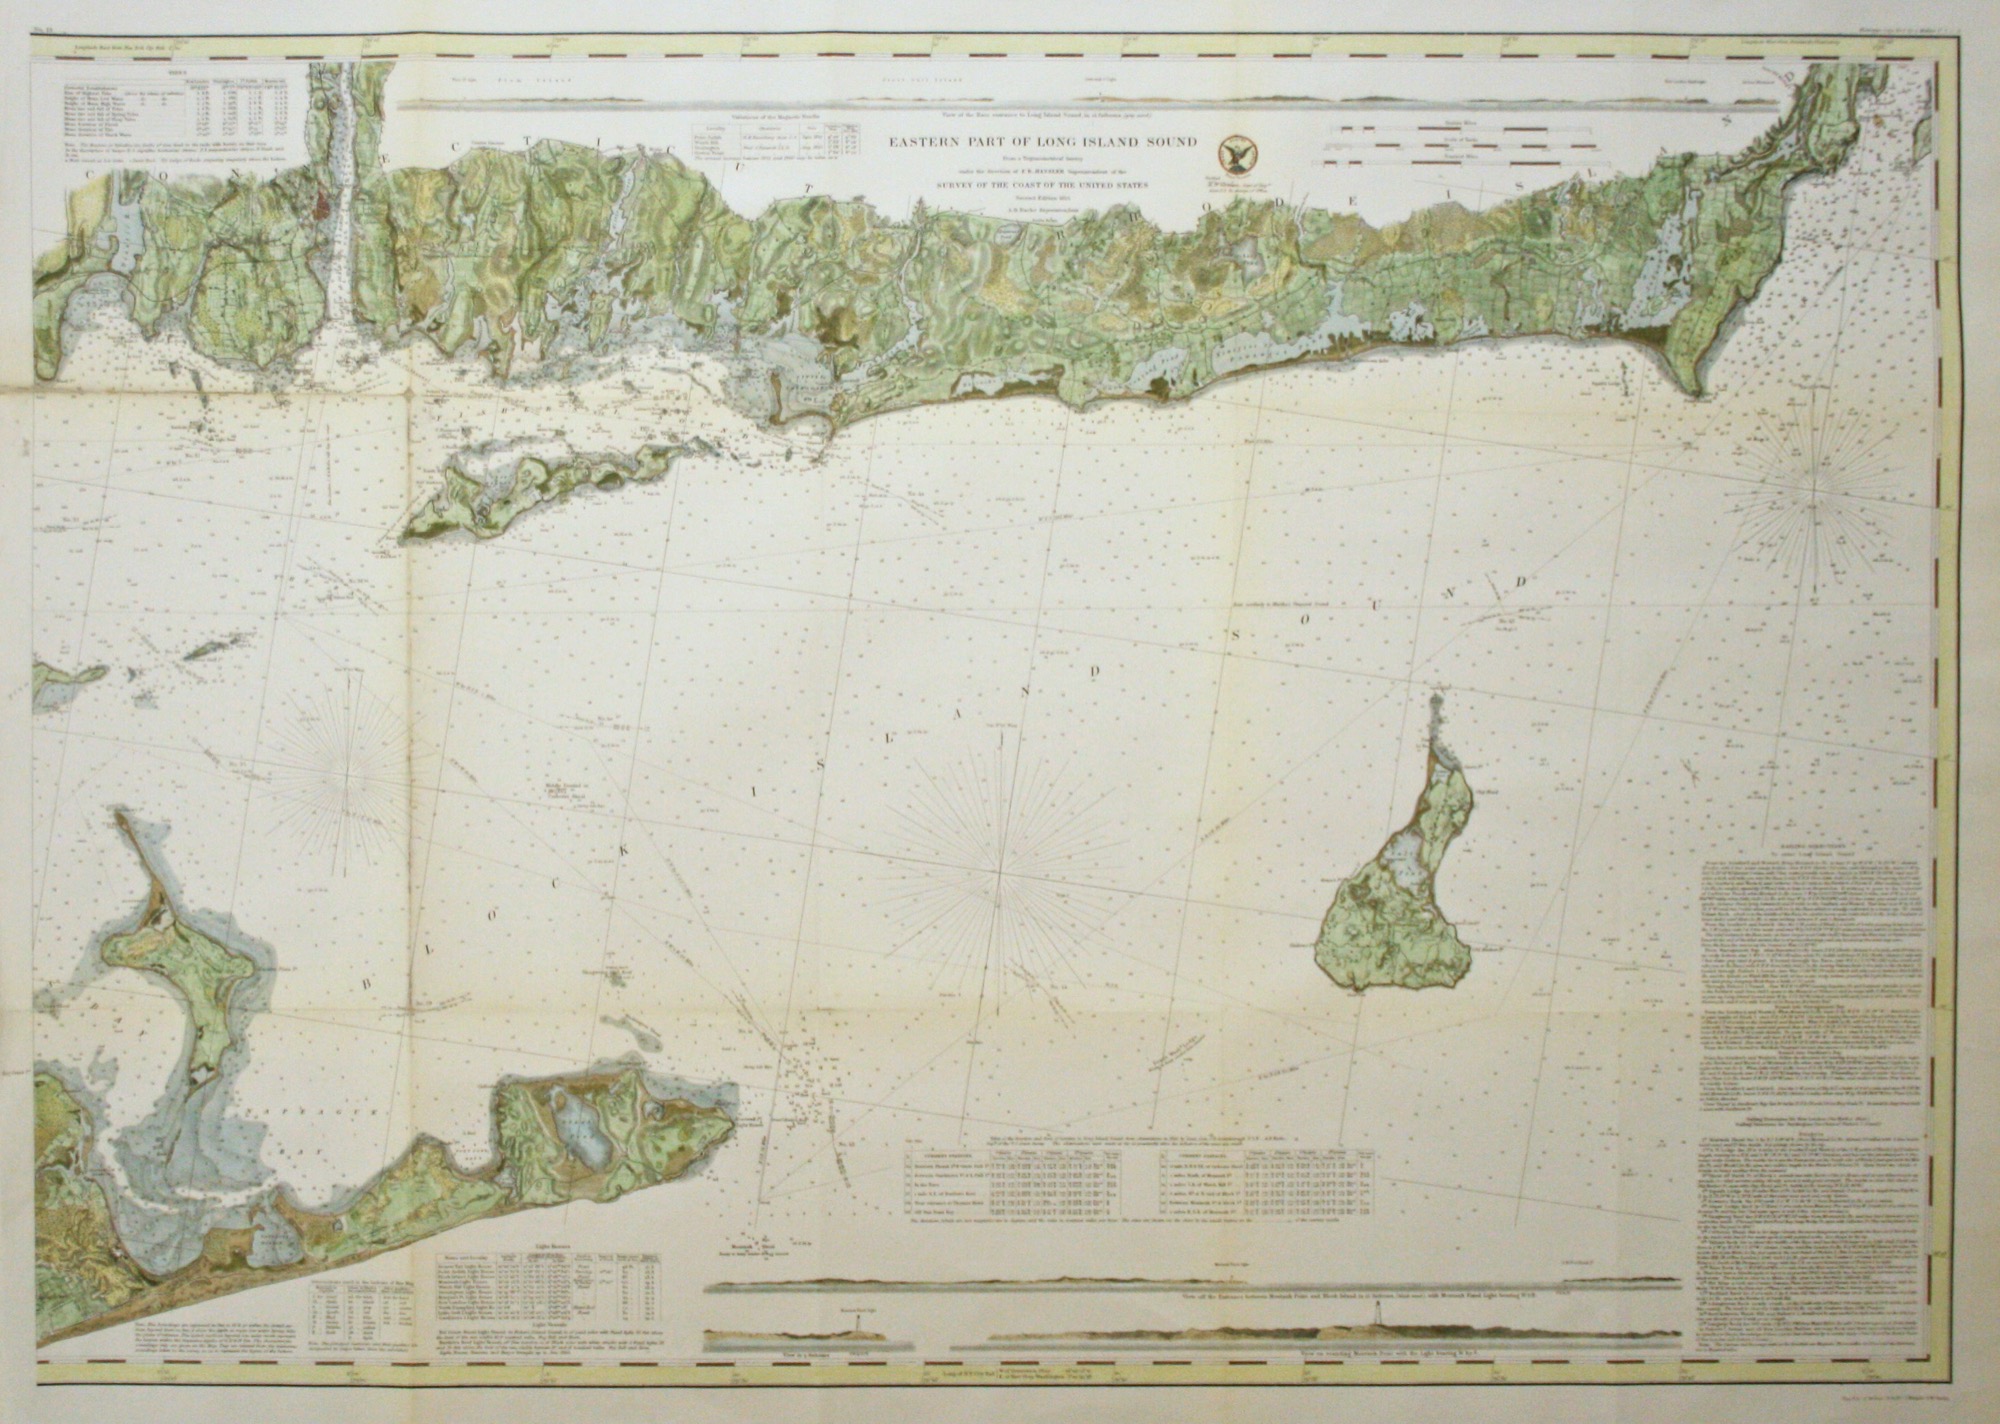 Long Island Sound 1855 (3 of 3)